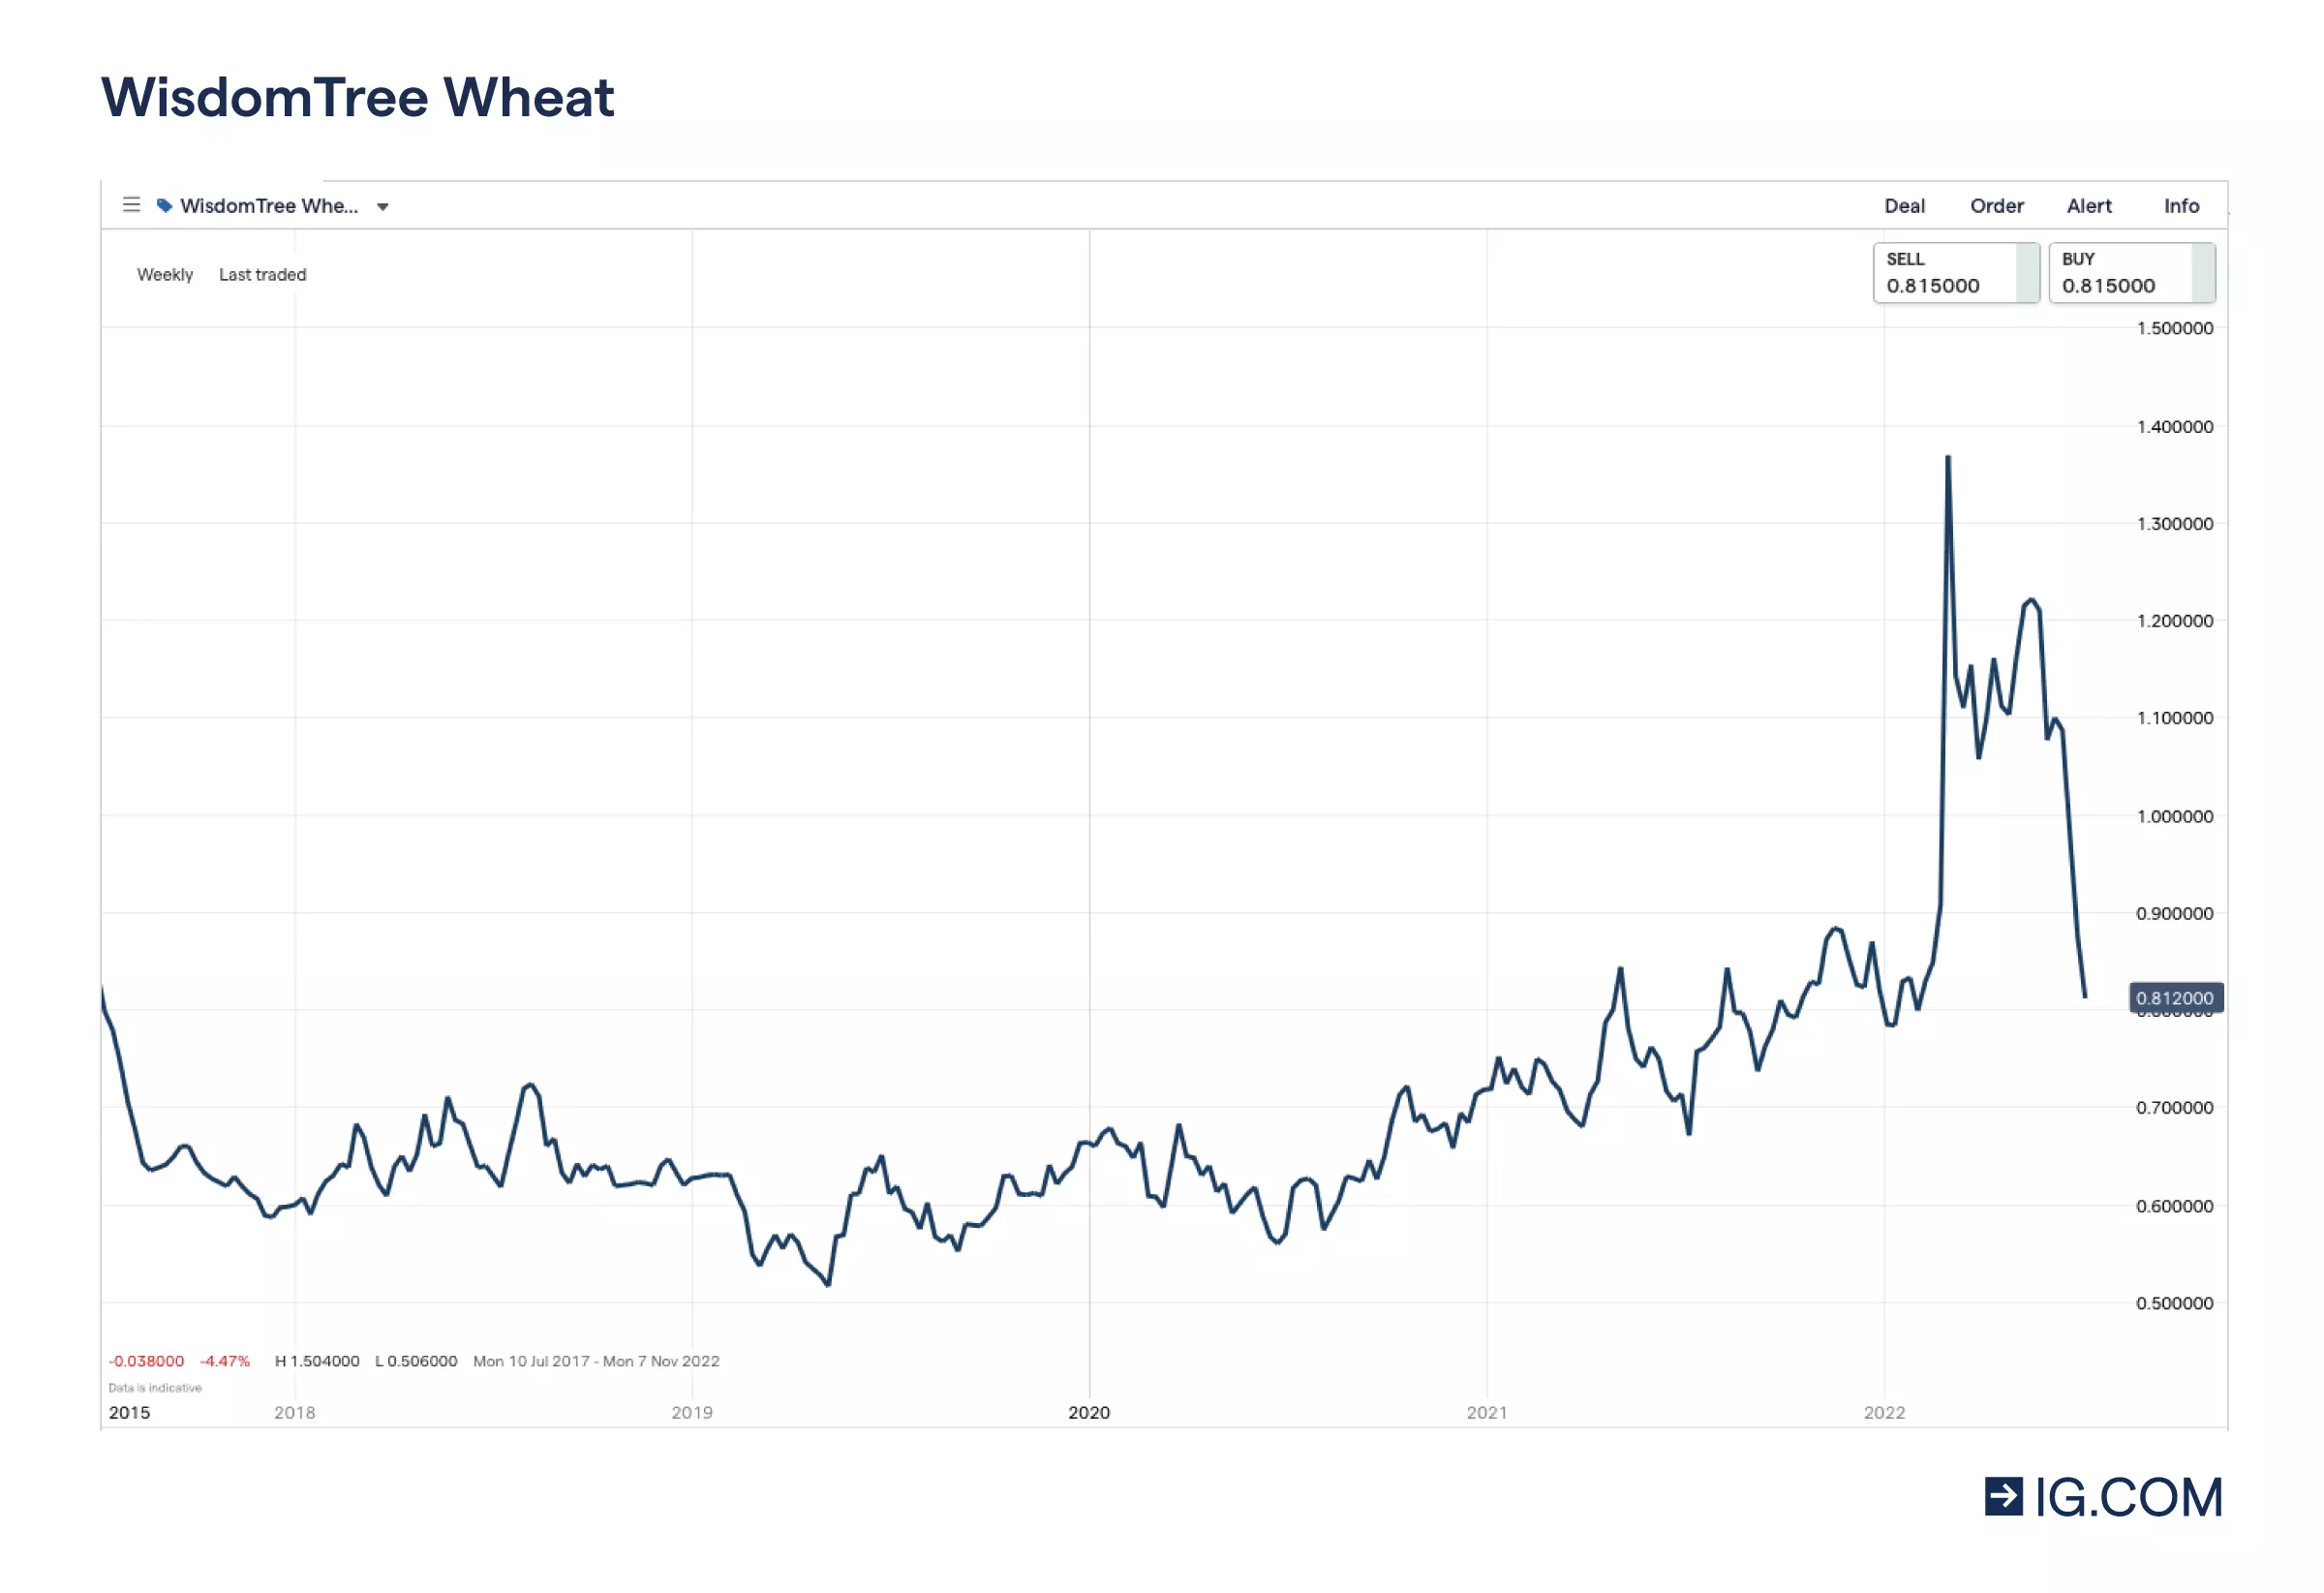 Image of WisdomTree Wheat chart showing its five-year performance